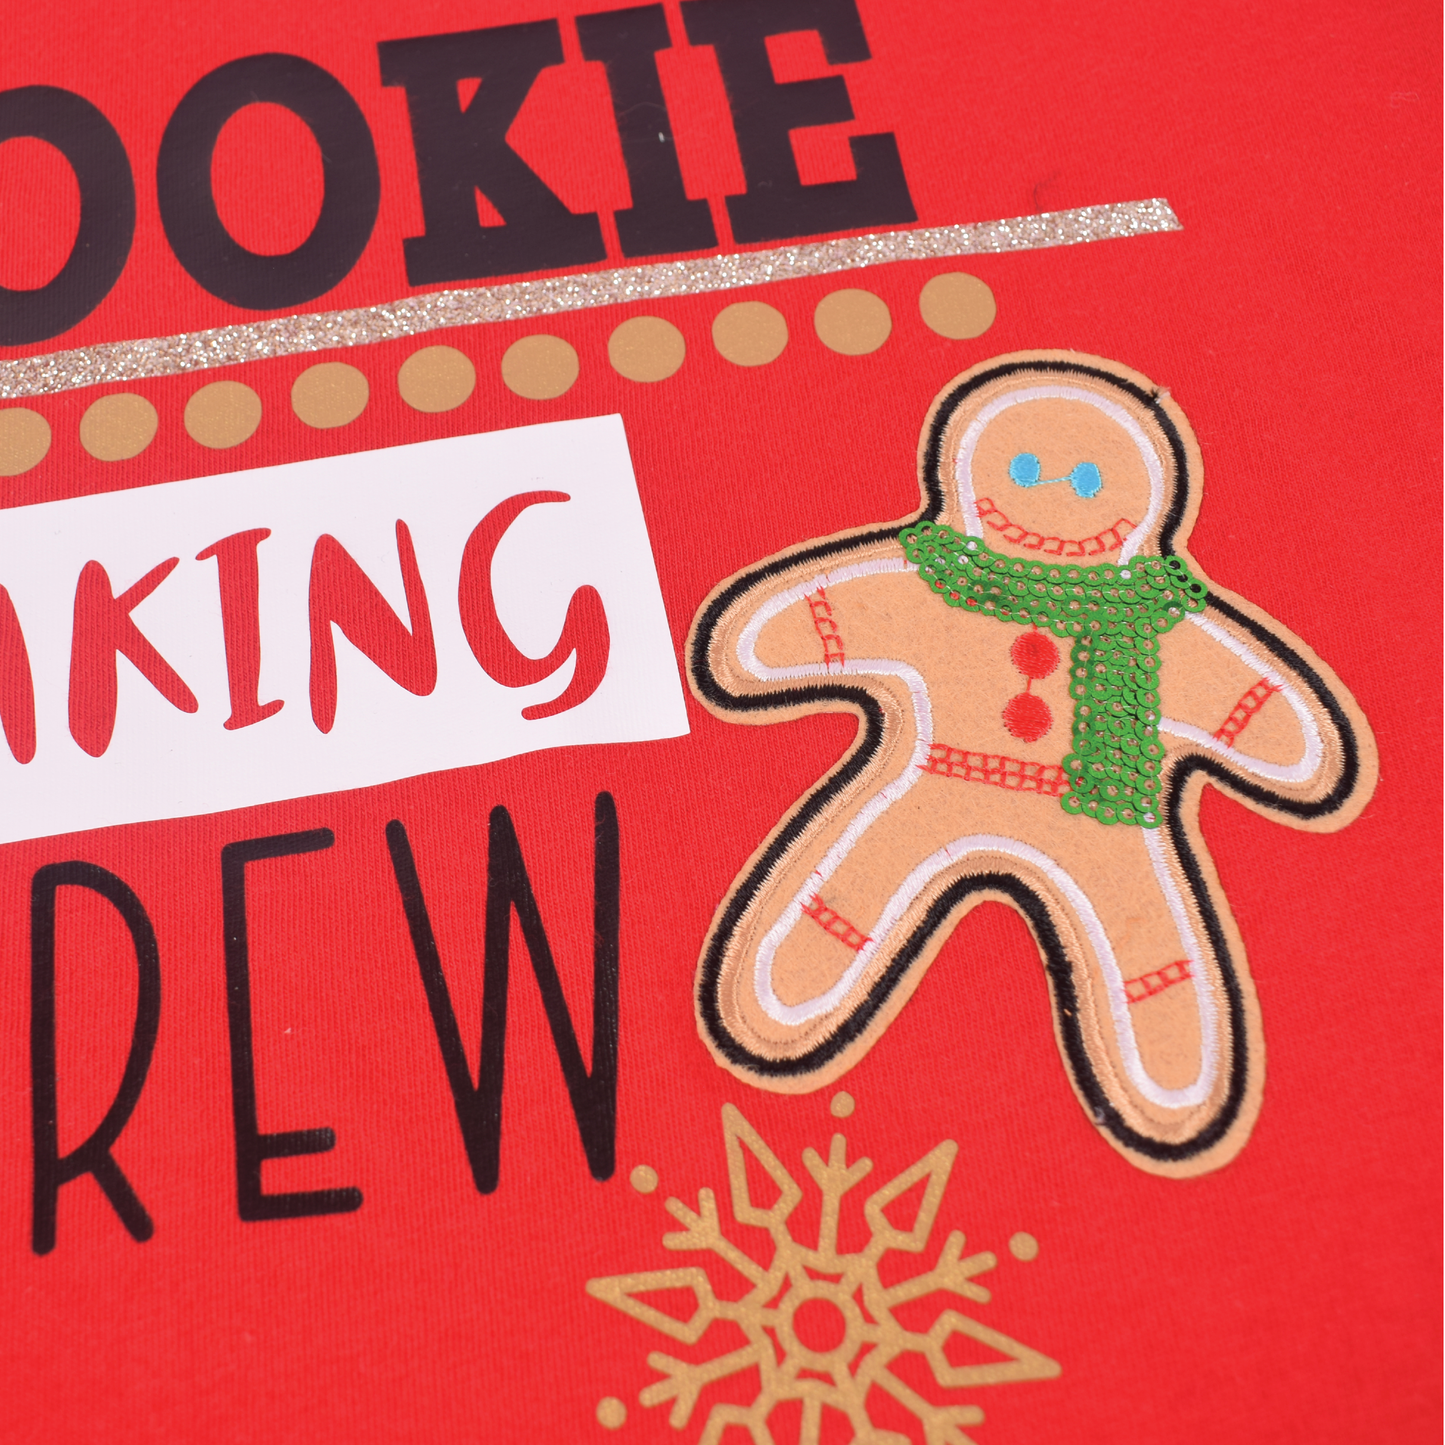 Cookie Baking Crew T–Shirt